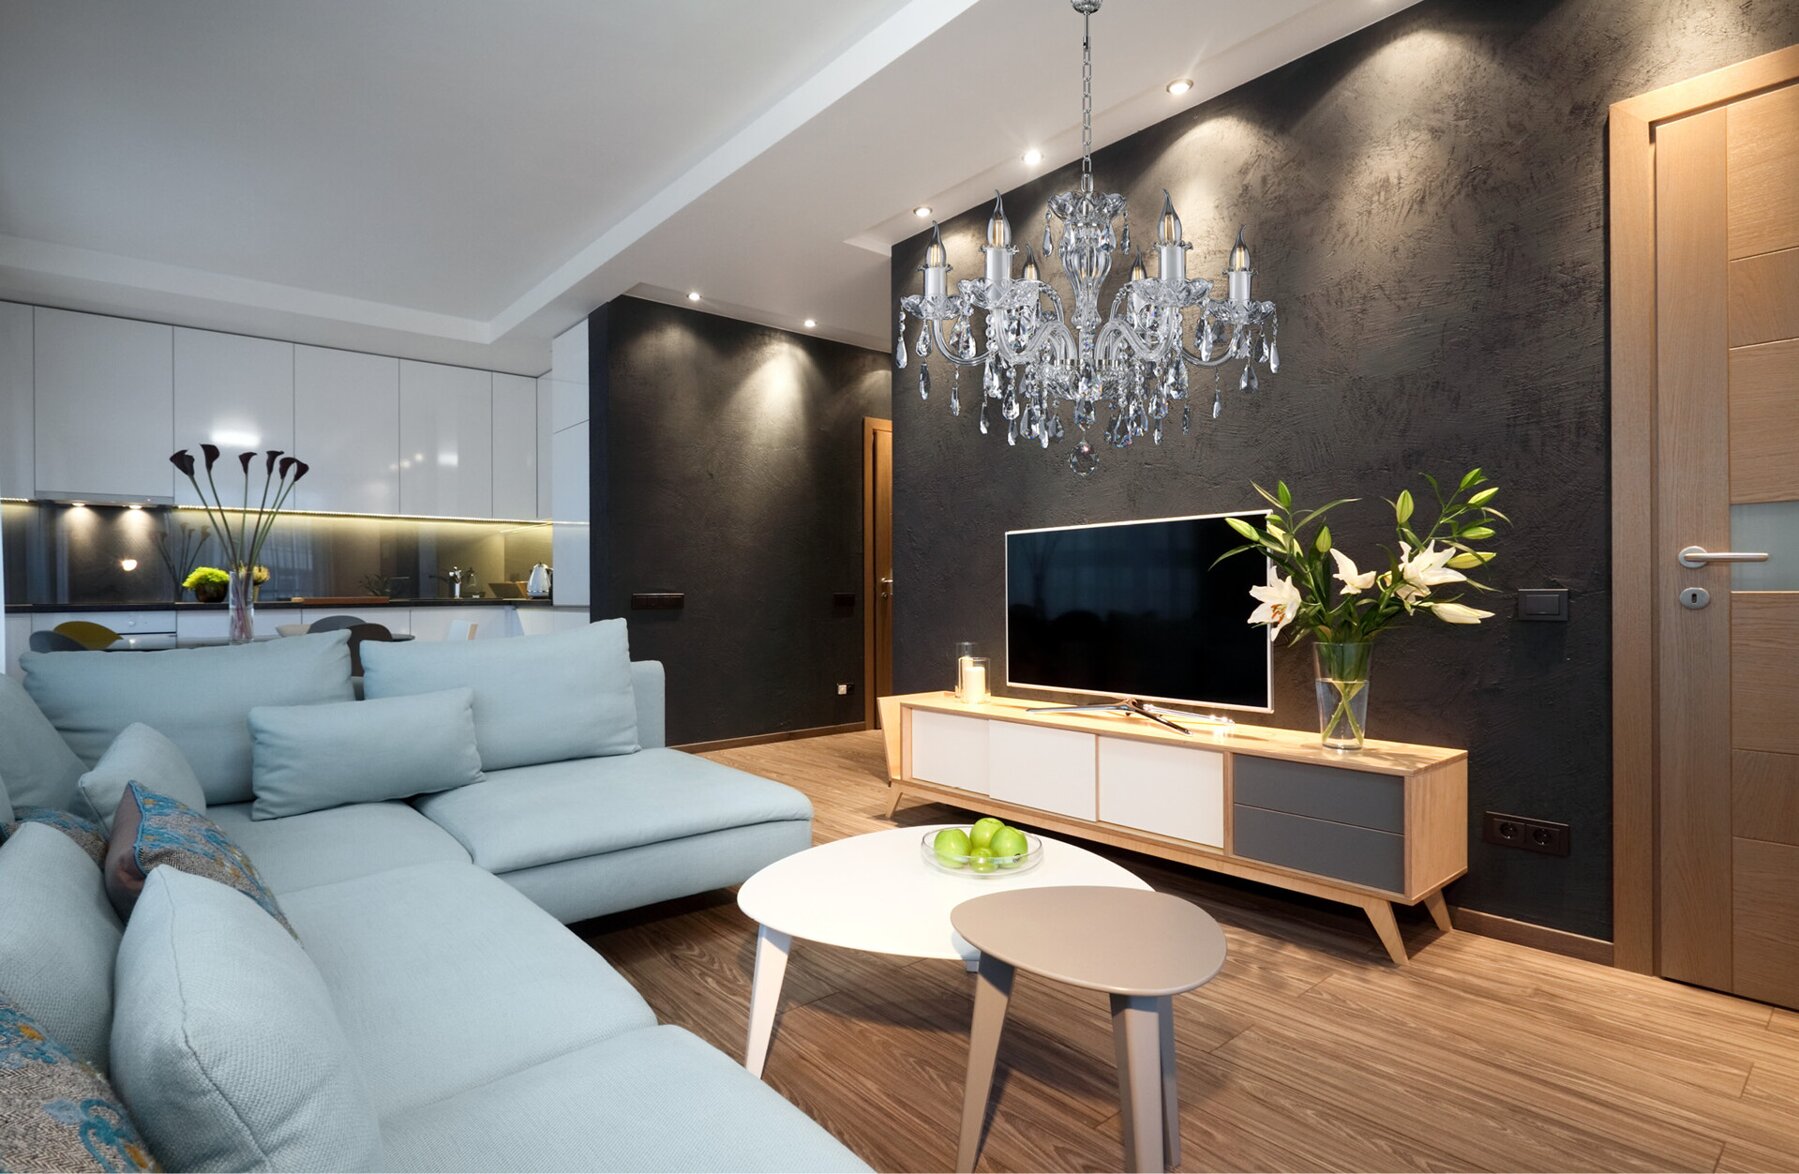 Chandelier for the modern living room in scandinavian style EL177609PB